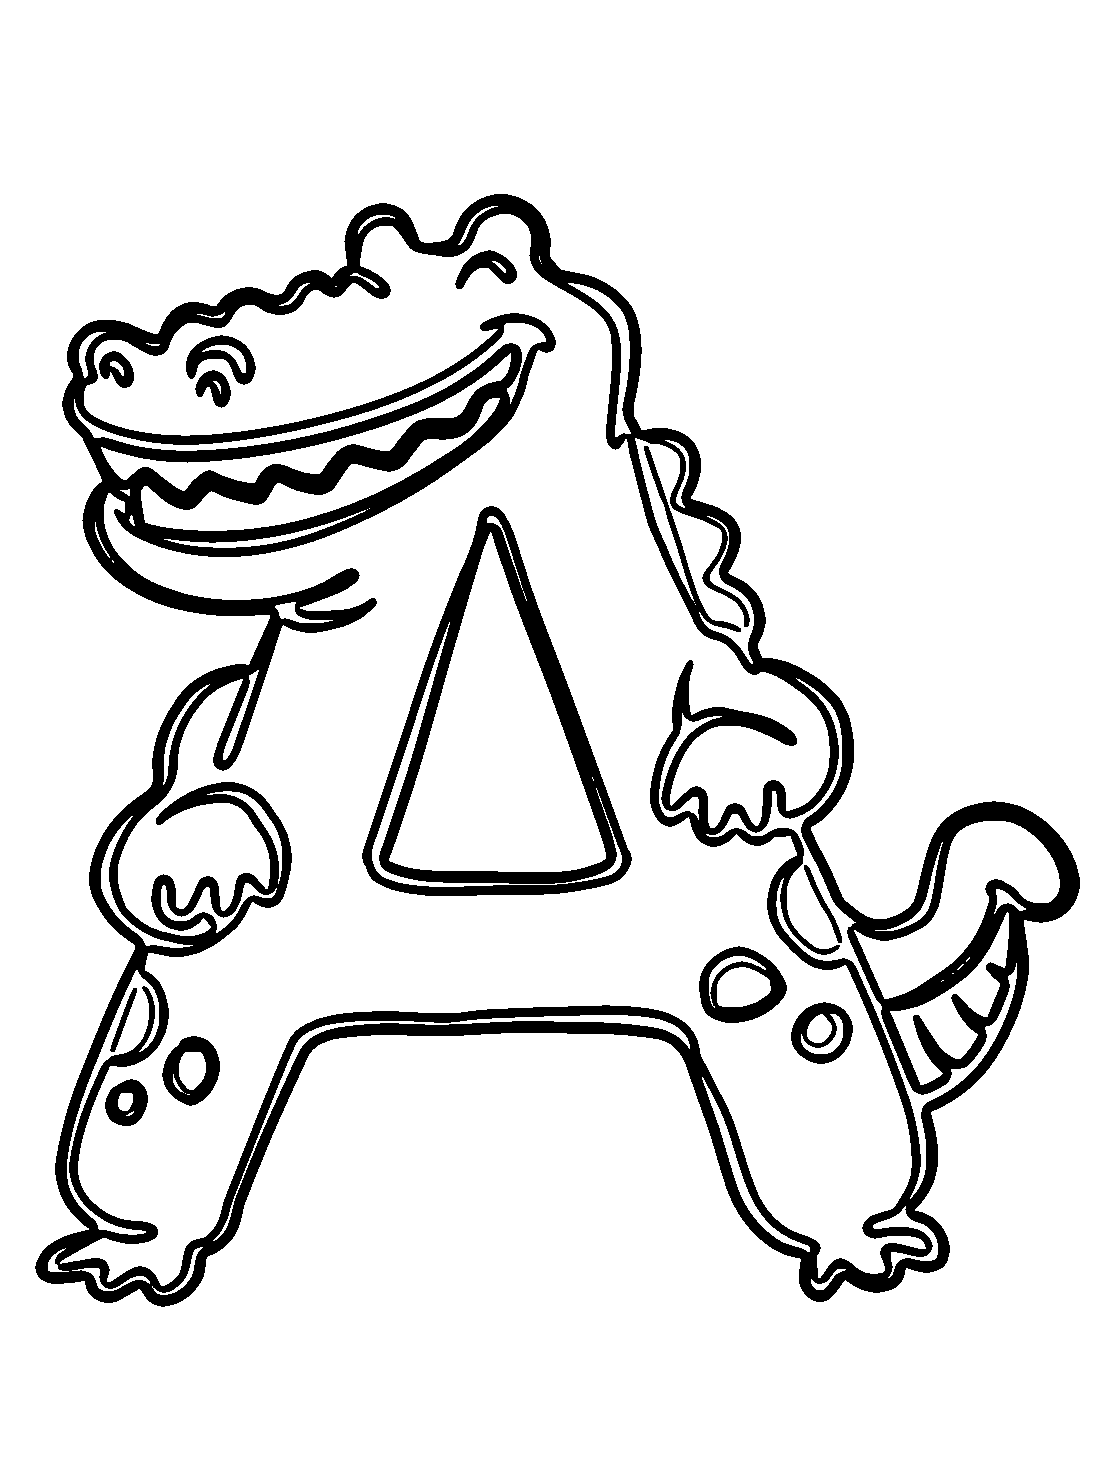 Alligators smile coloring pages